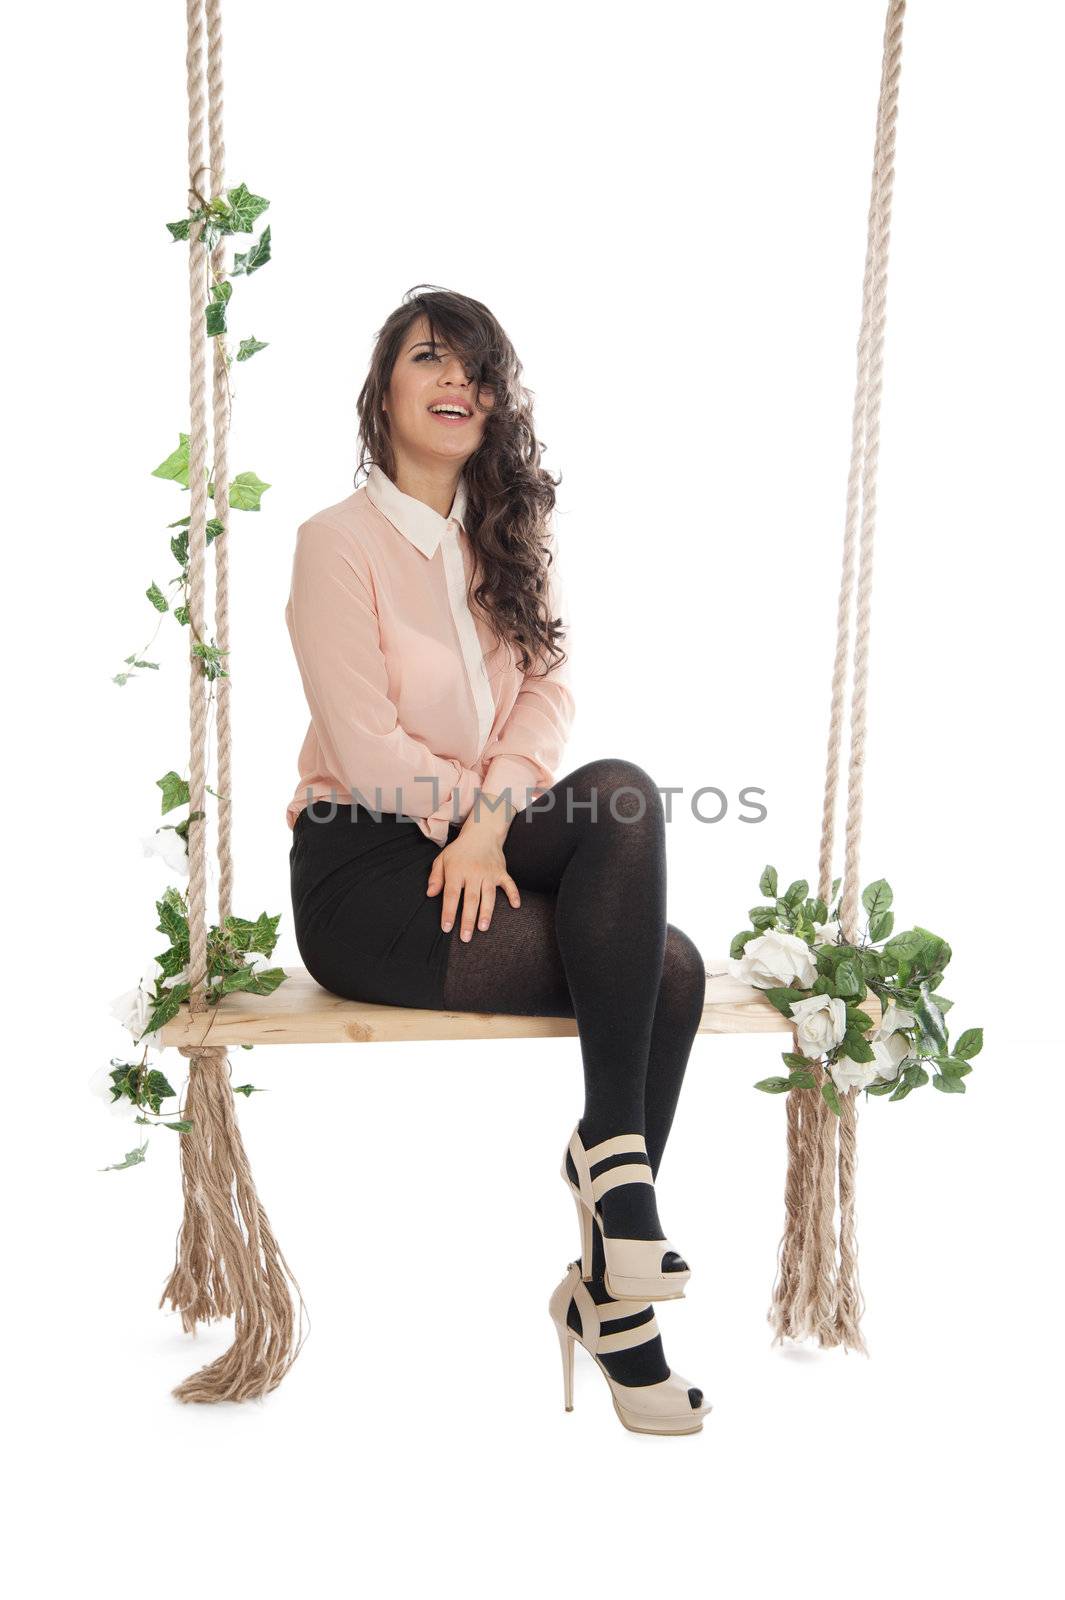 A woman is sitting on a swing by raduga21